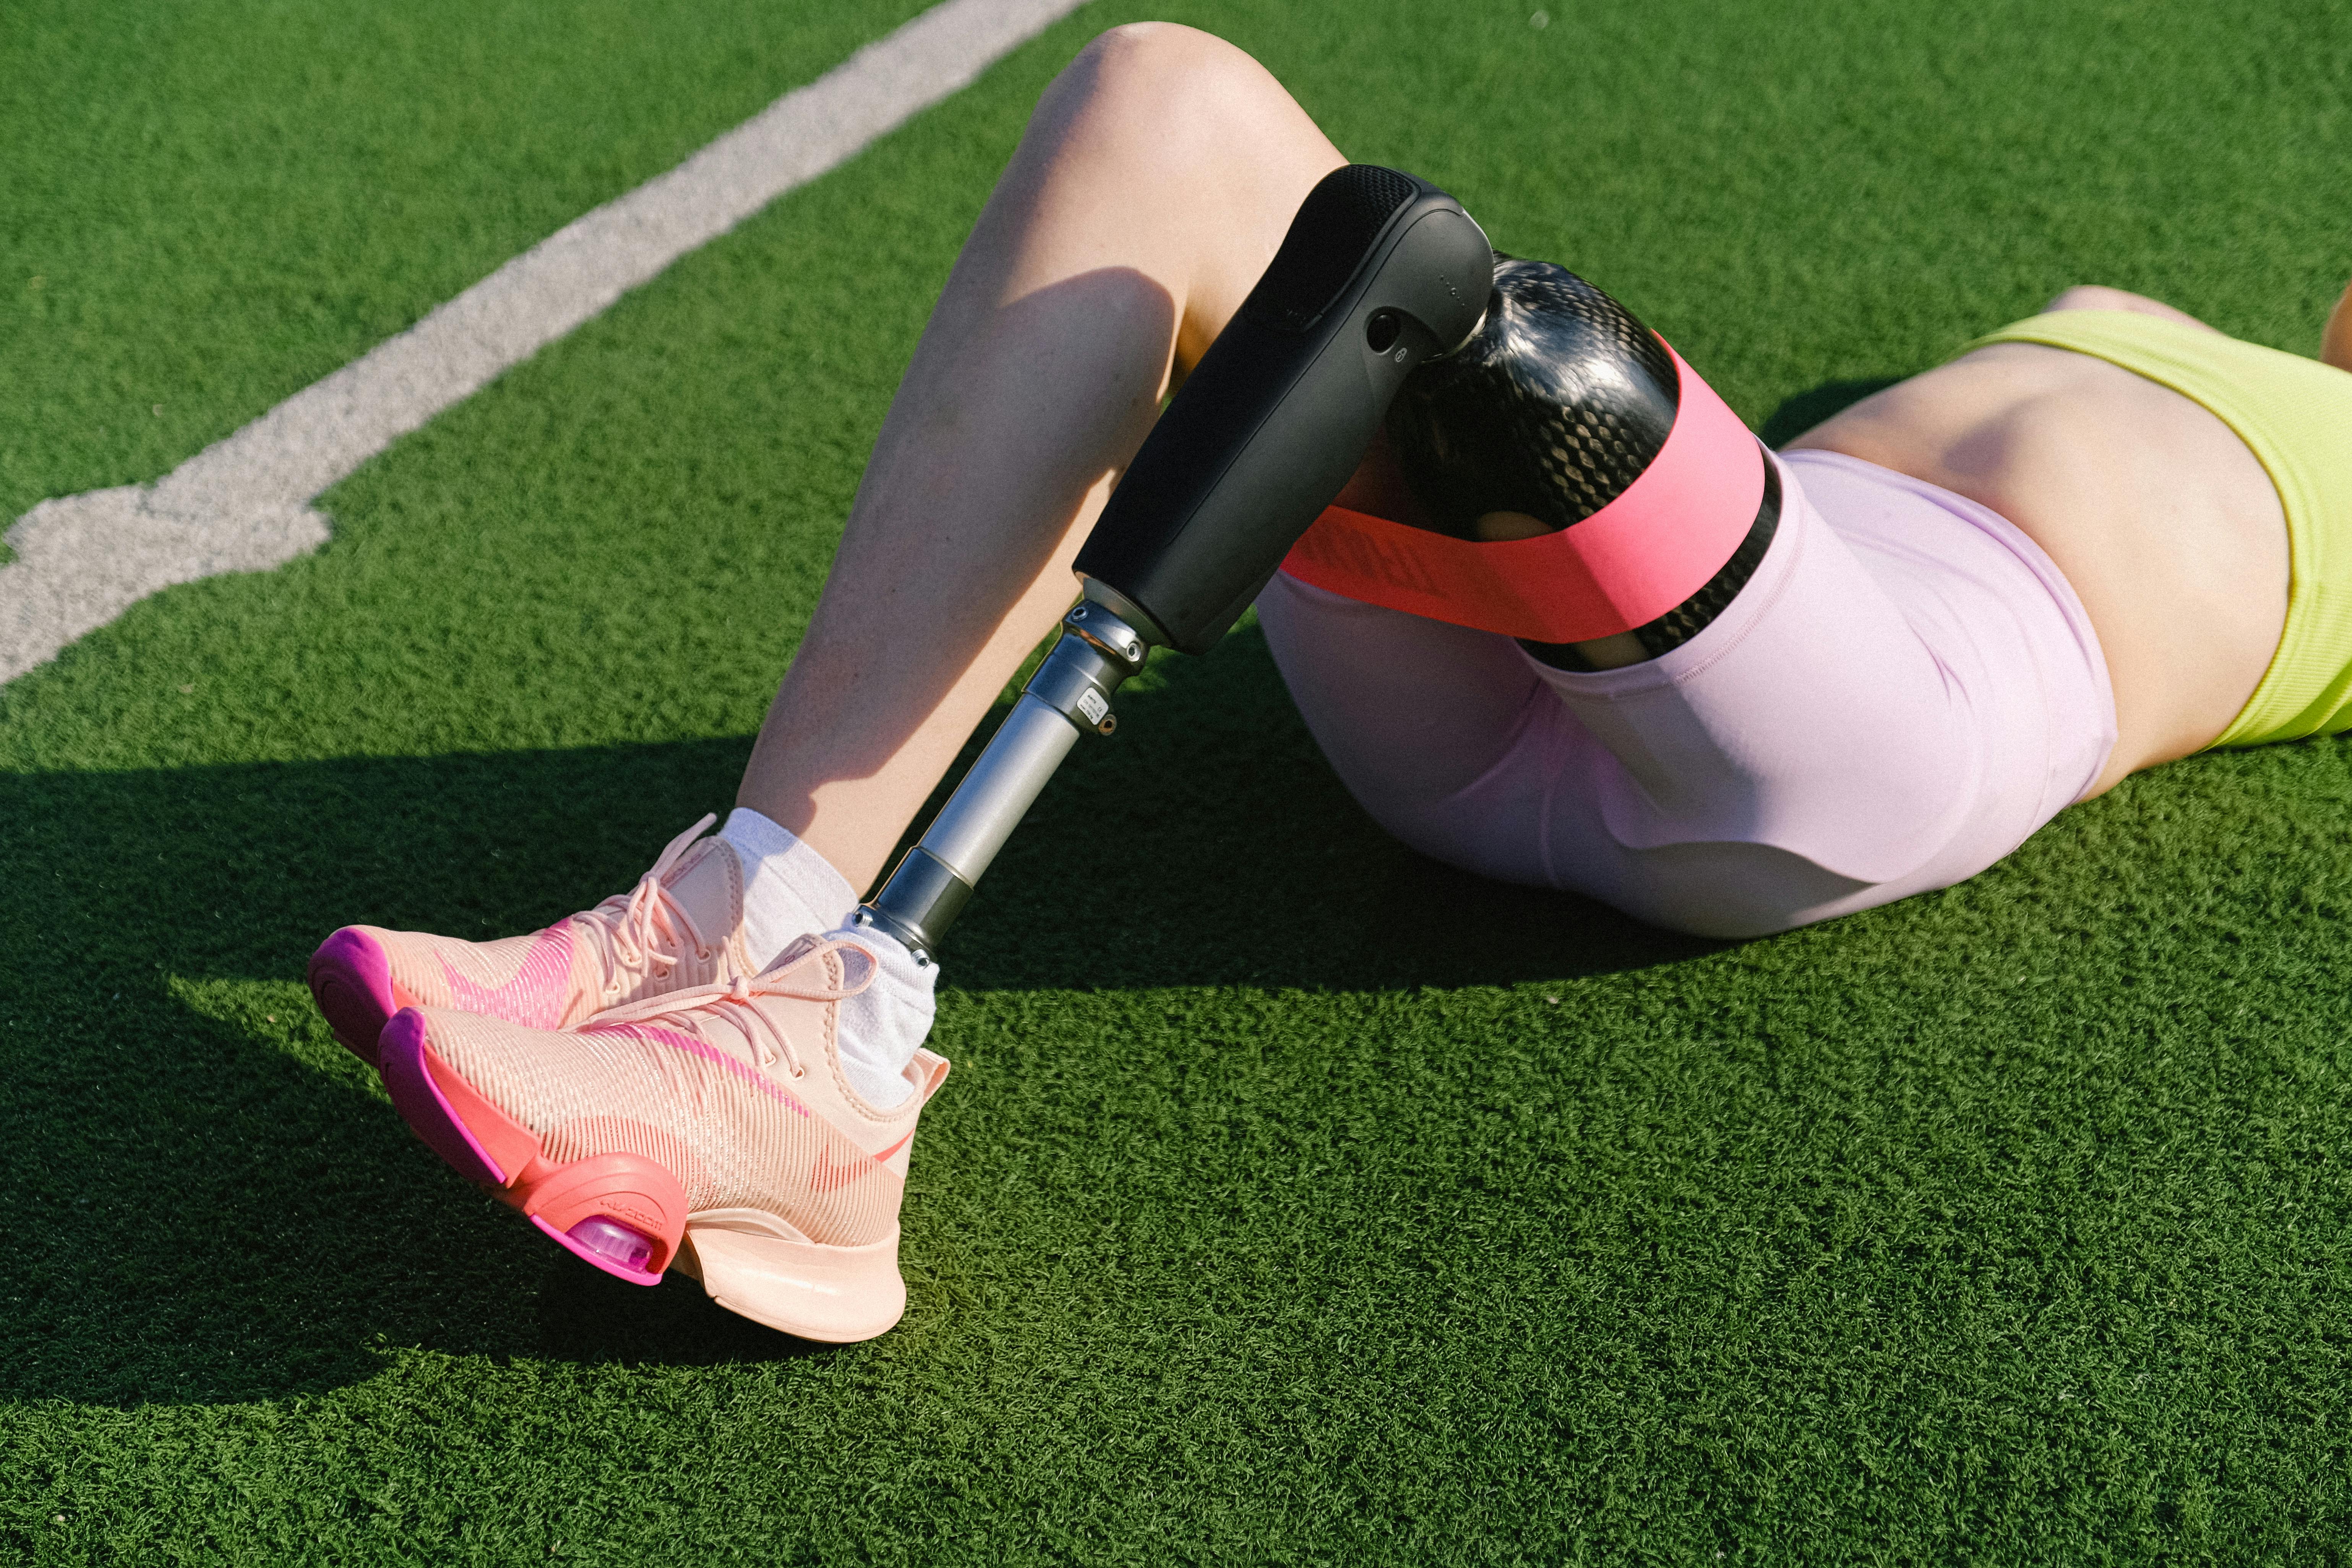 athlete with prosthetic leg lying on grass